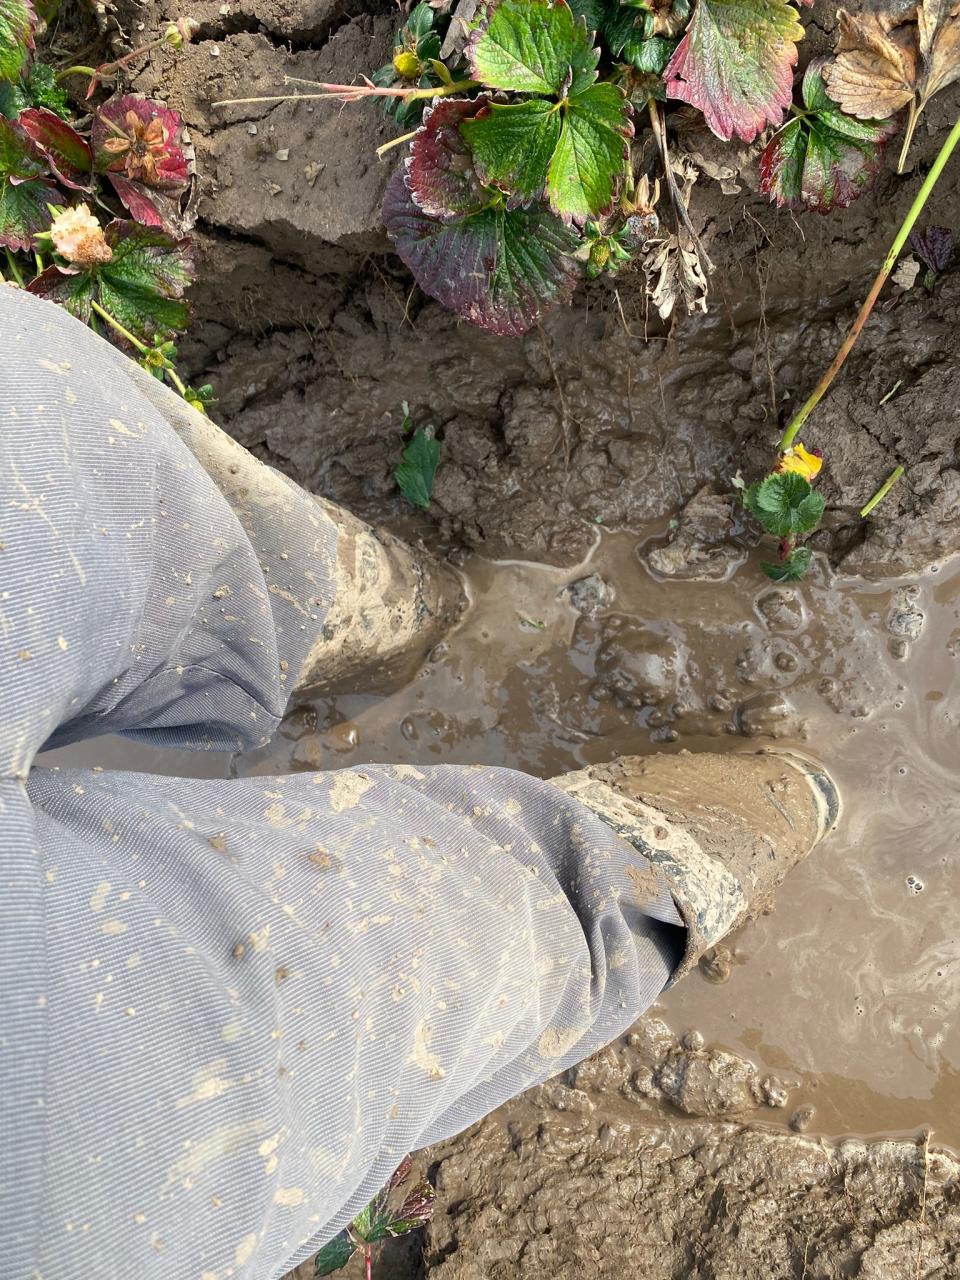 A farmworker stands in muddy fields following last week's storms.